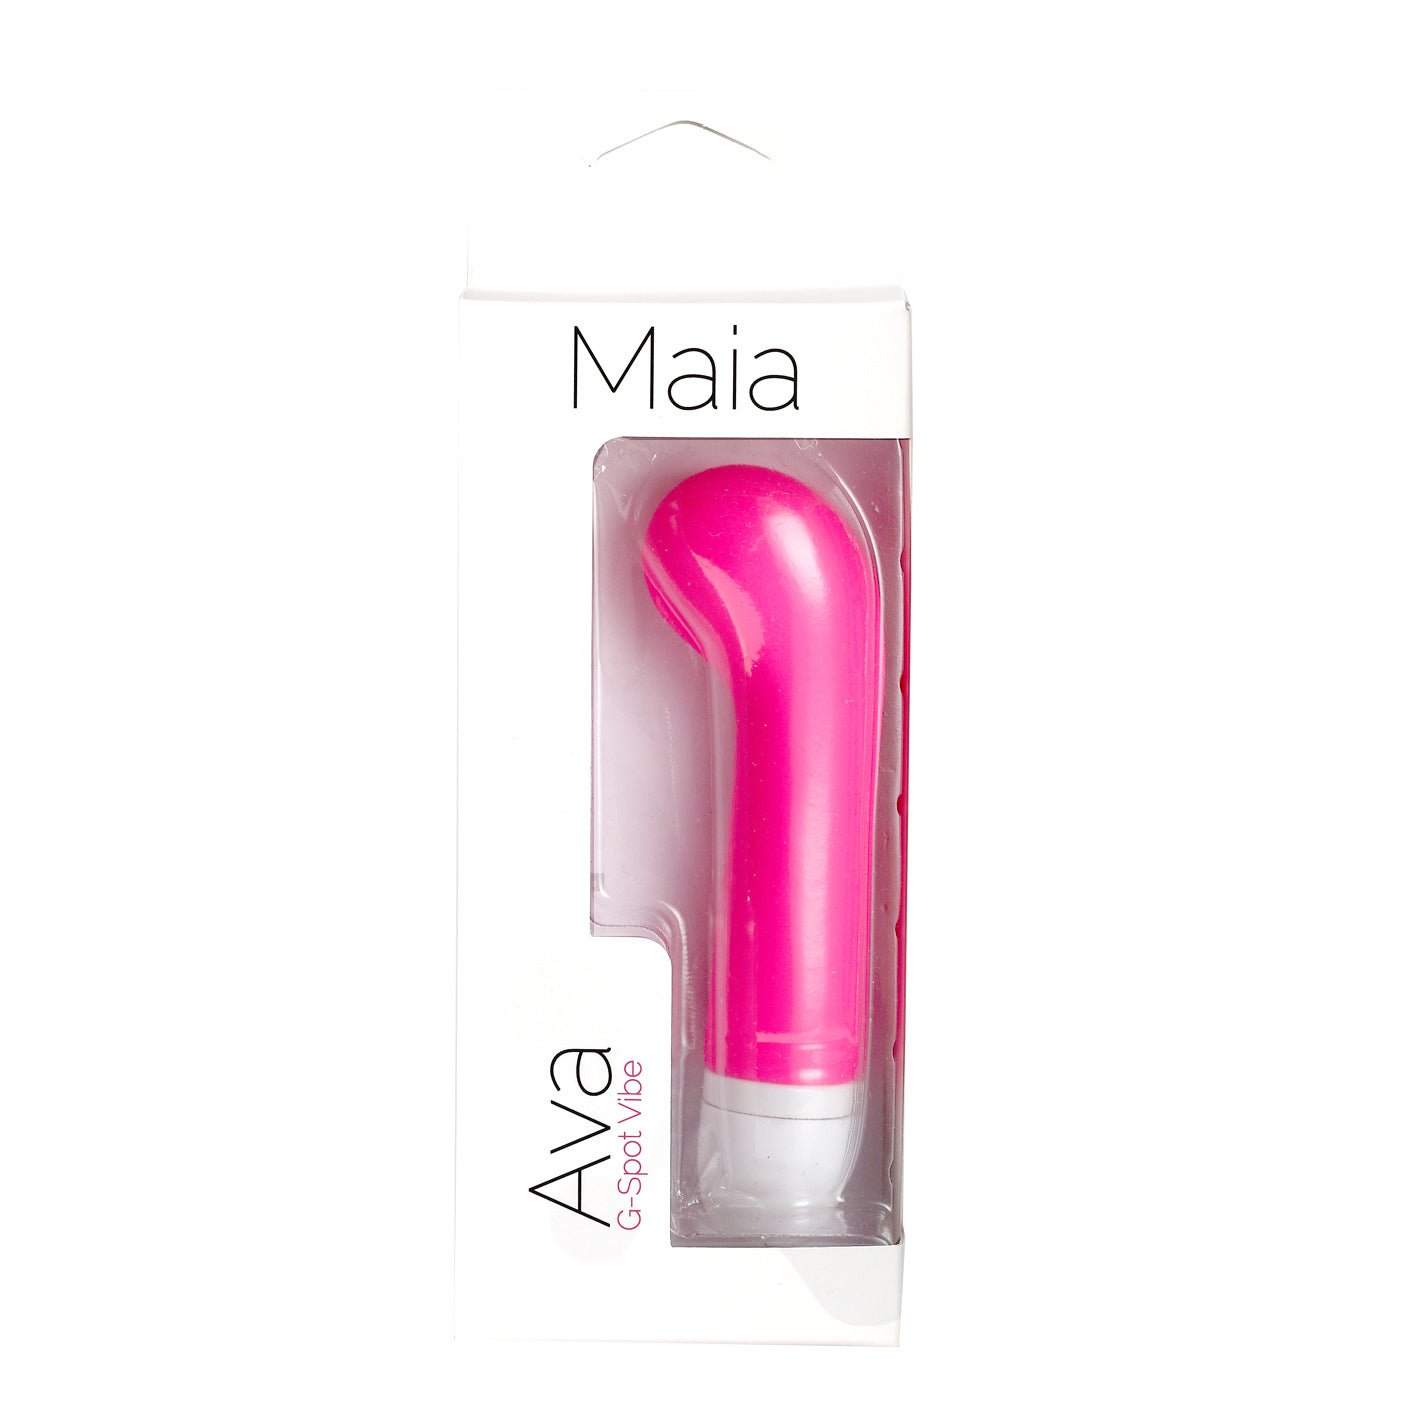 Ava Silicone Mini G-Spot Vibrator - Pink (Maia Toys)